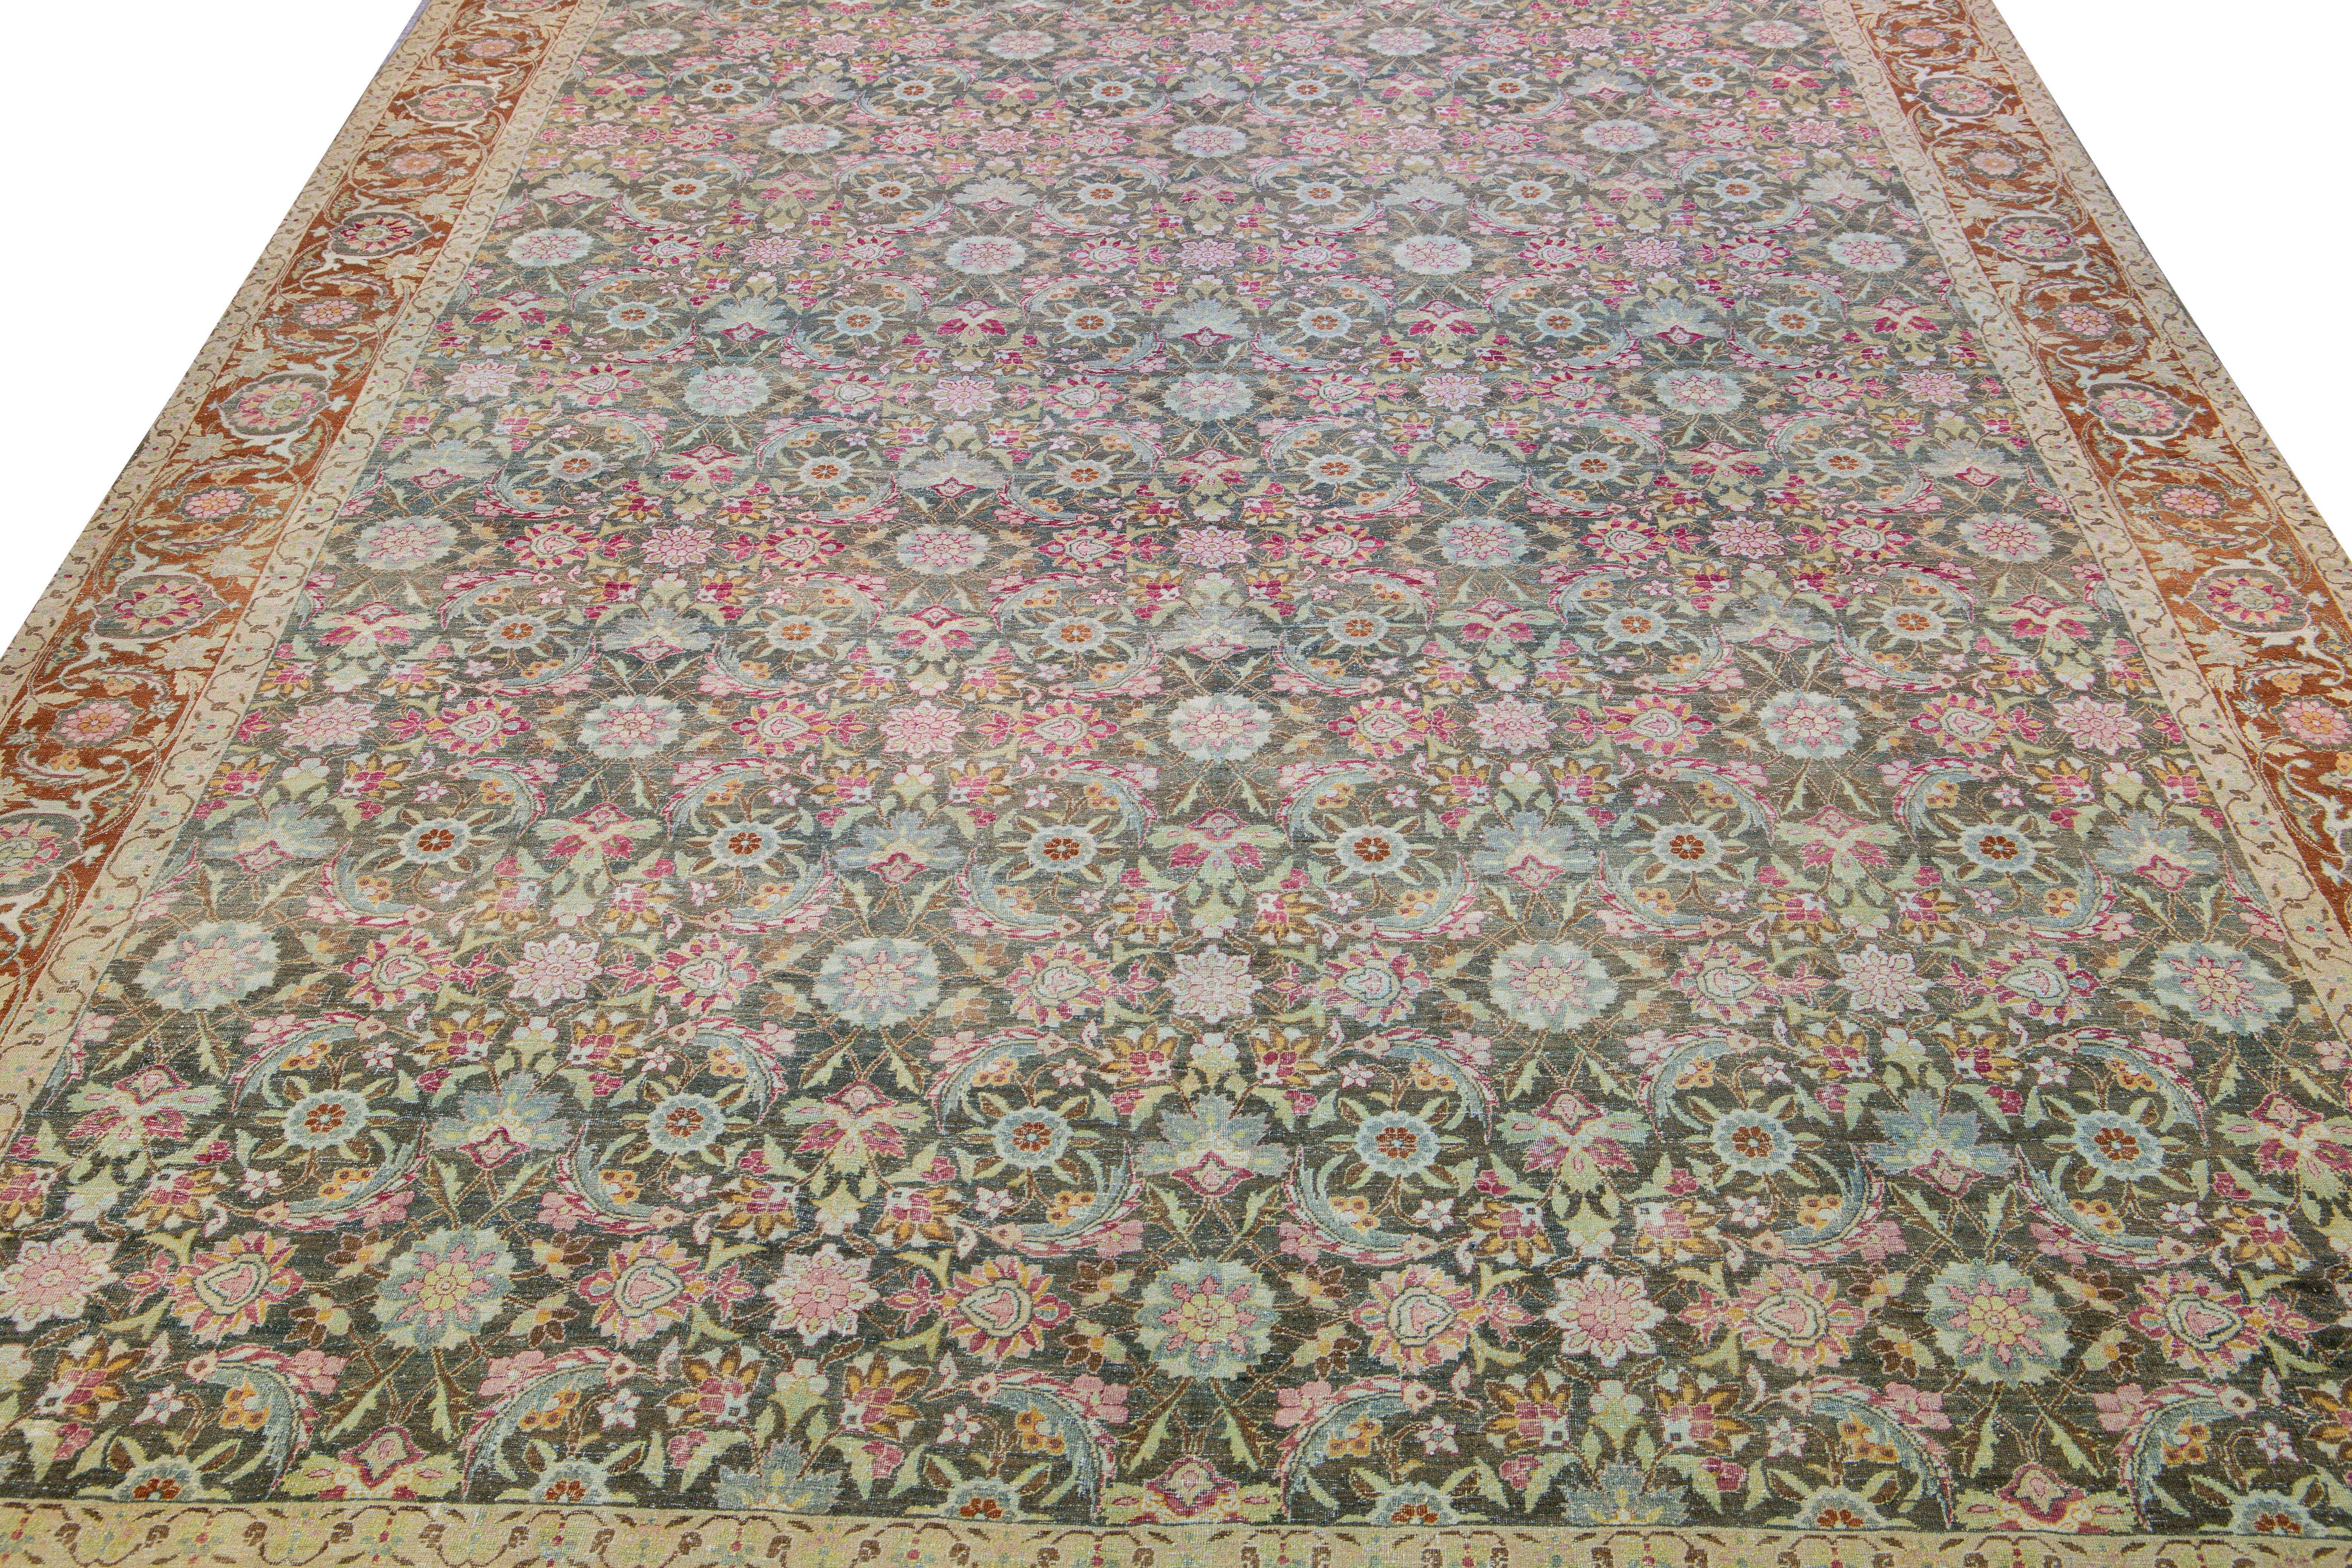 Islamic Antique Tabriz Handmade Multicolor Botanical Designed Oversize Gray Wool Rug For Sale